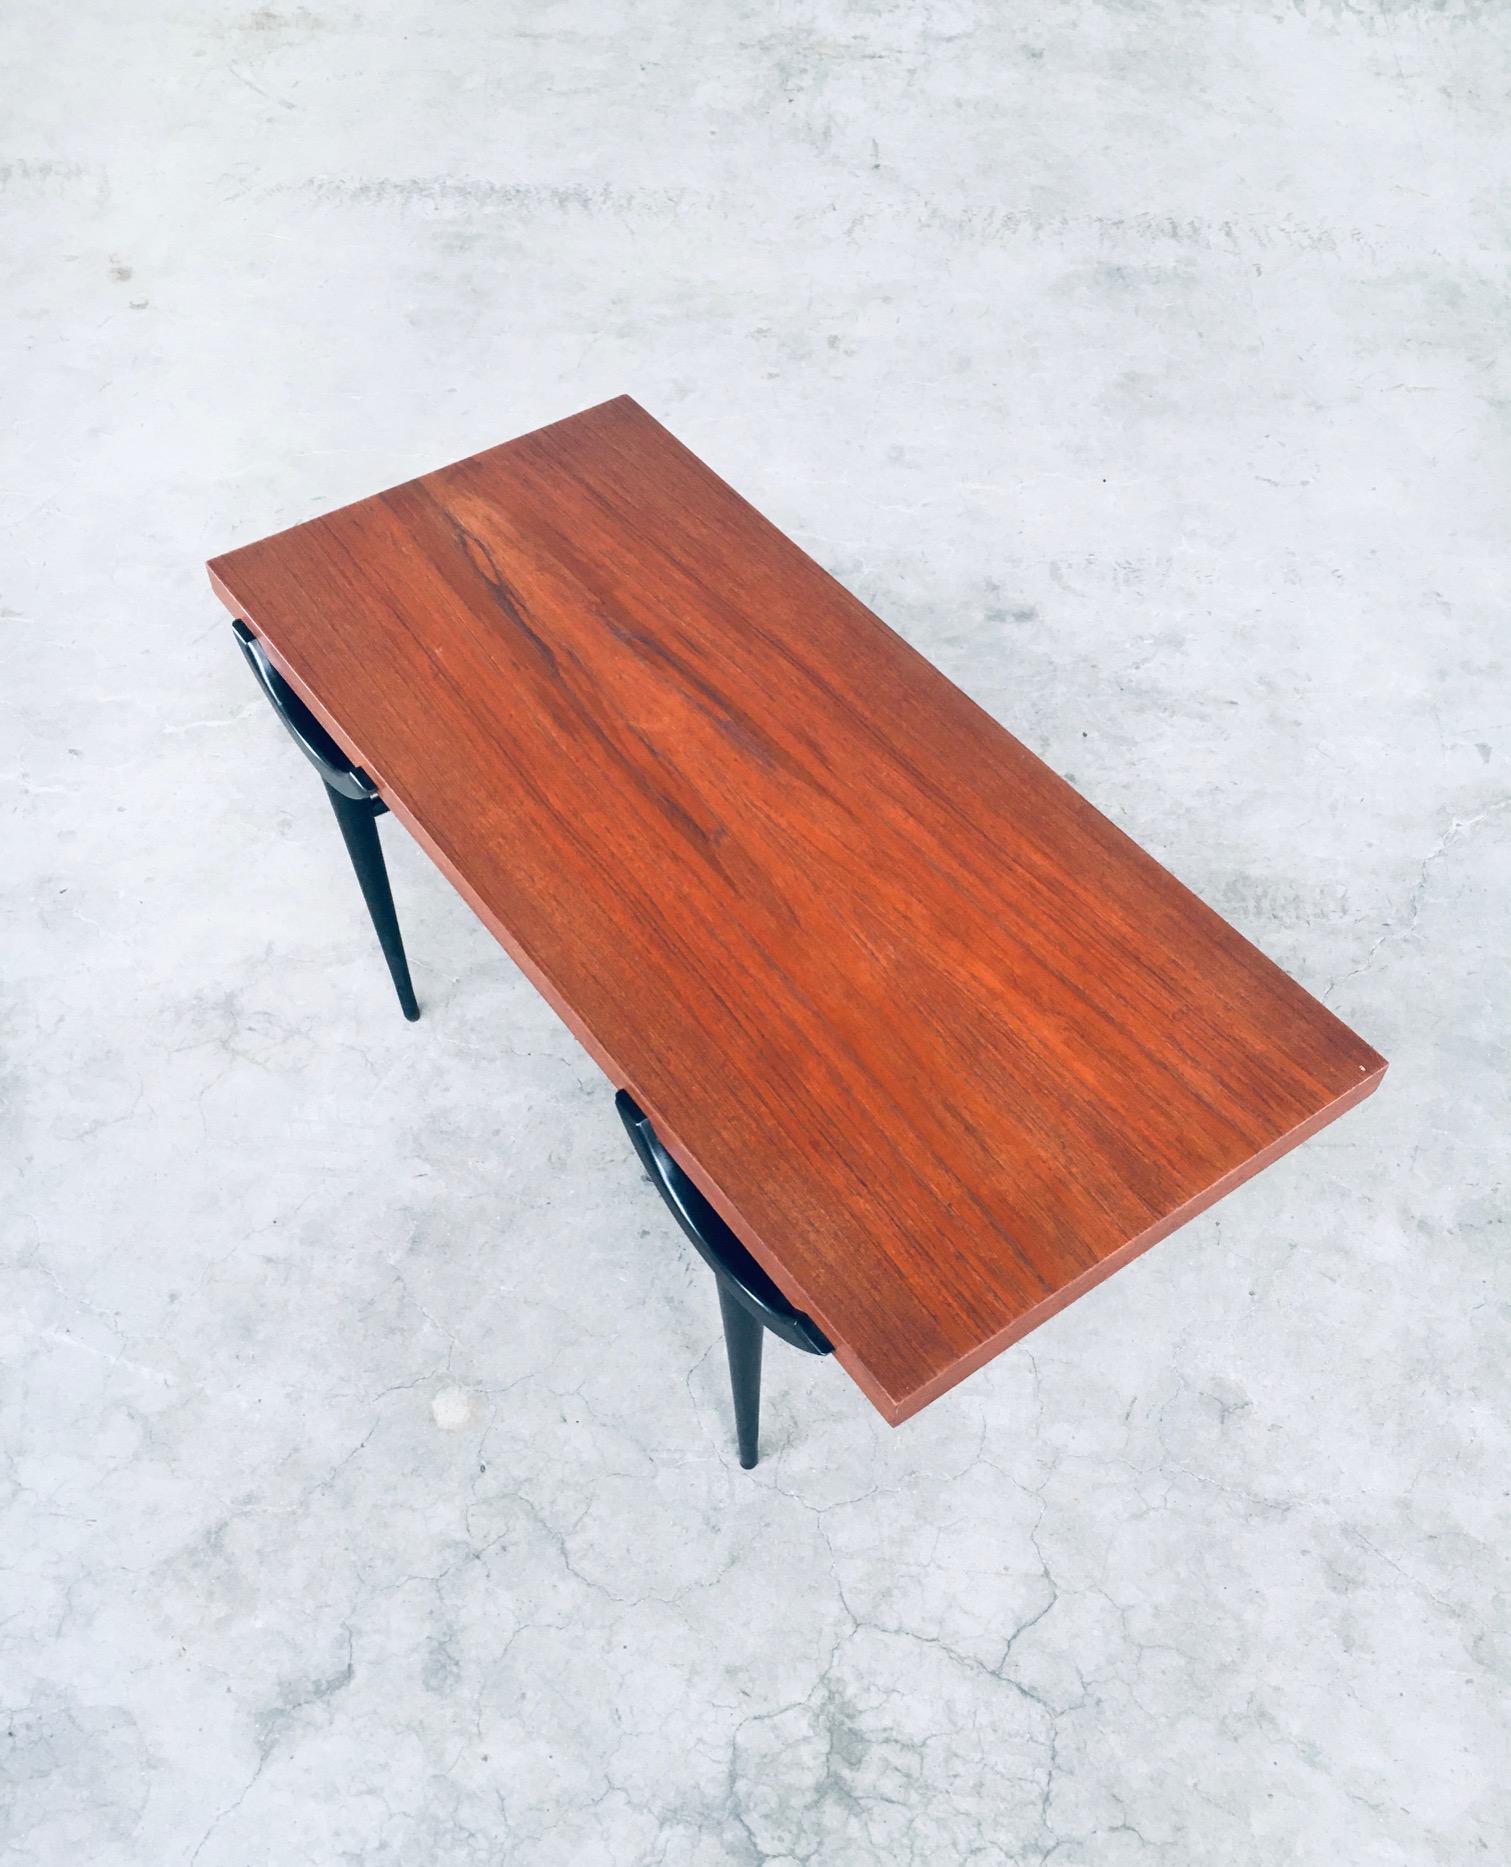 Midcentury Scandinavian Design Coffee Table, Denmark 1960's For Sale 3